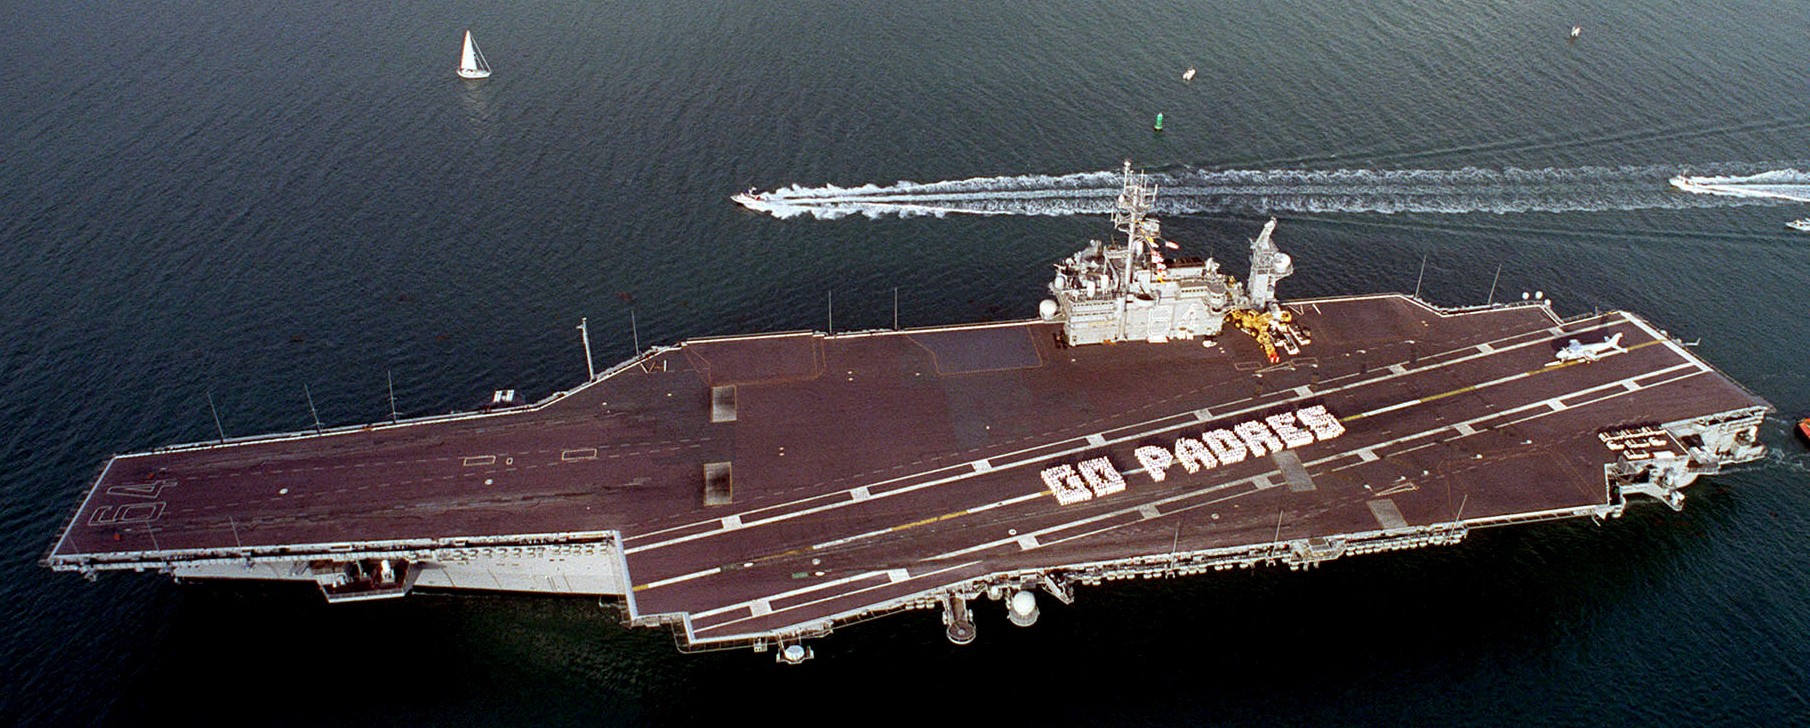 cv-64 uss constellation kitty hawk class aircraft carrier point loma san diego 120